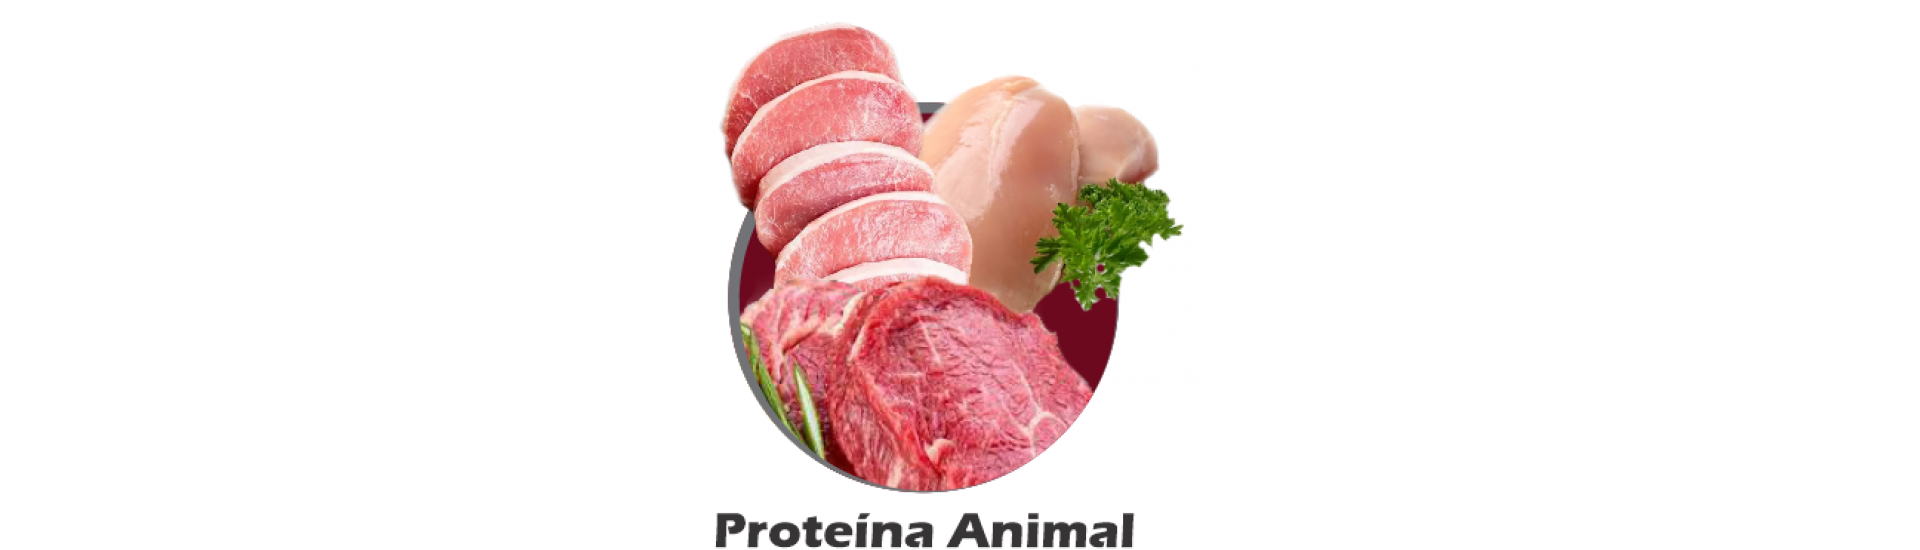 Proteína Animal